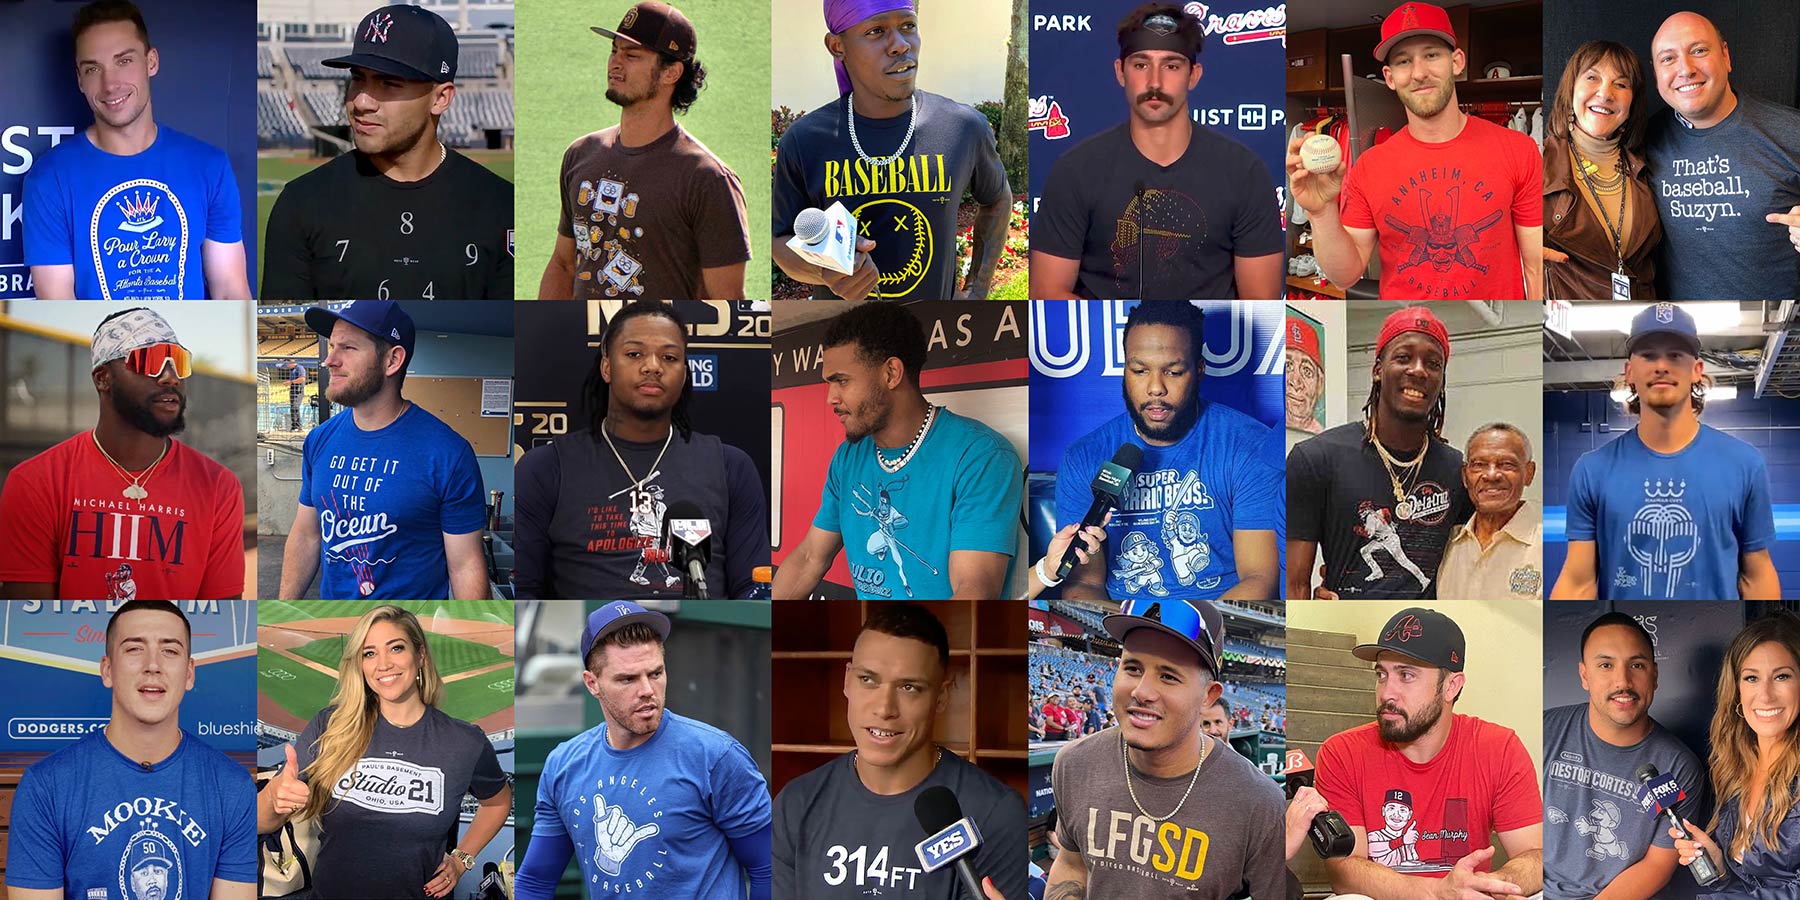 AllStar Team Roster Shirt  Softball shirt designs, Baseball